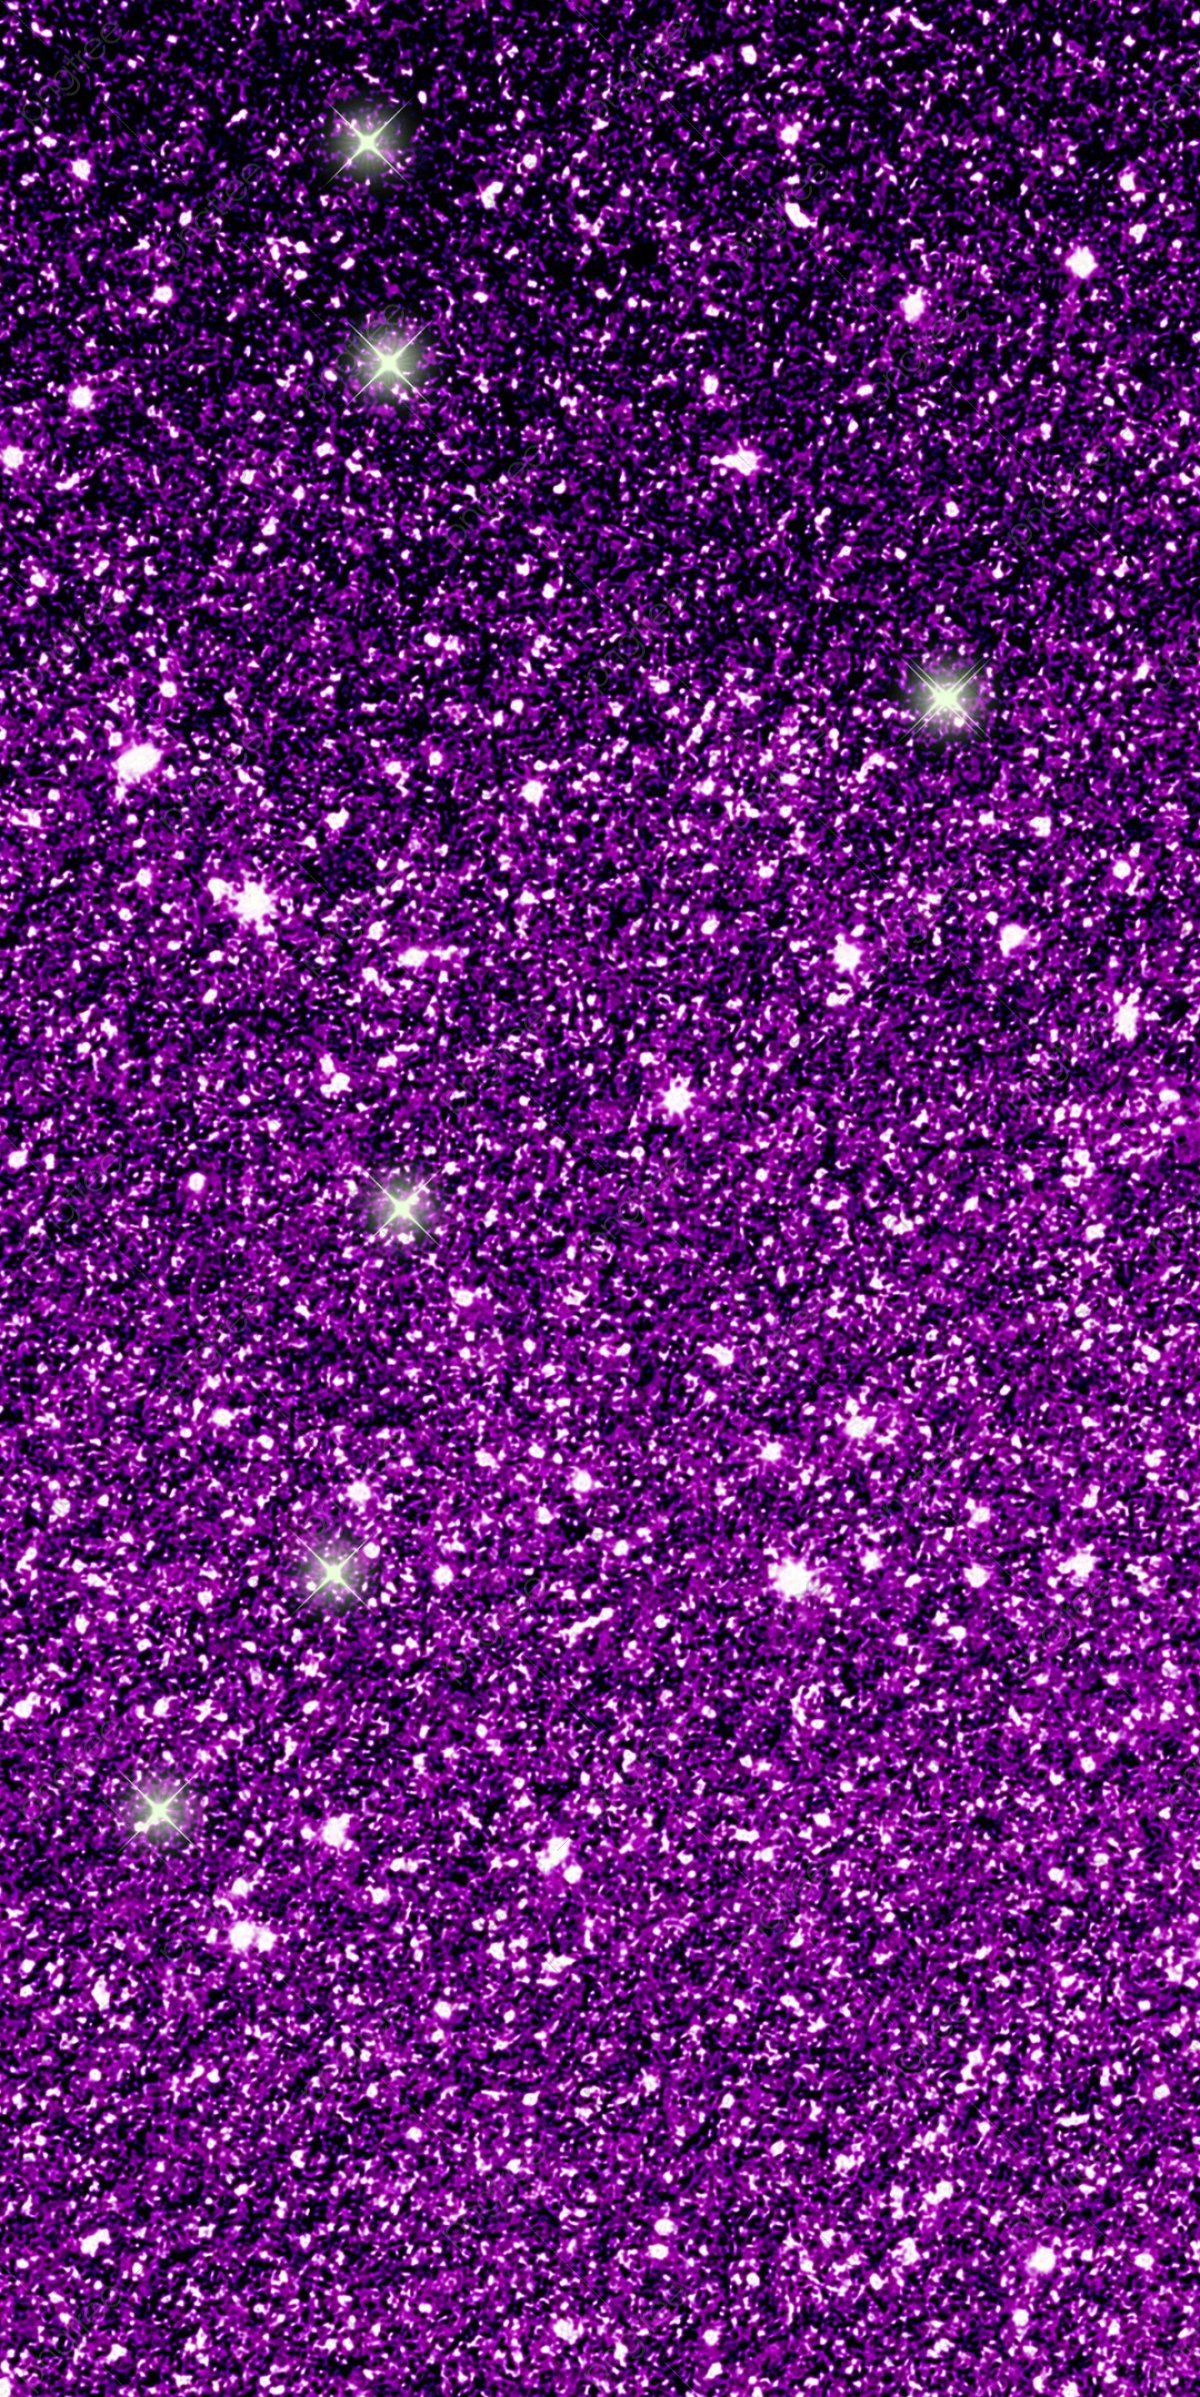 Dark Purple Glitter  Tap to see more bedazzling glittery wallpaper   mobile9